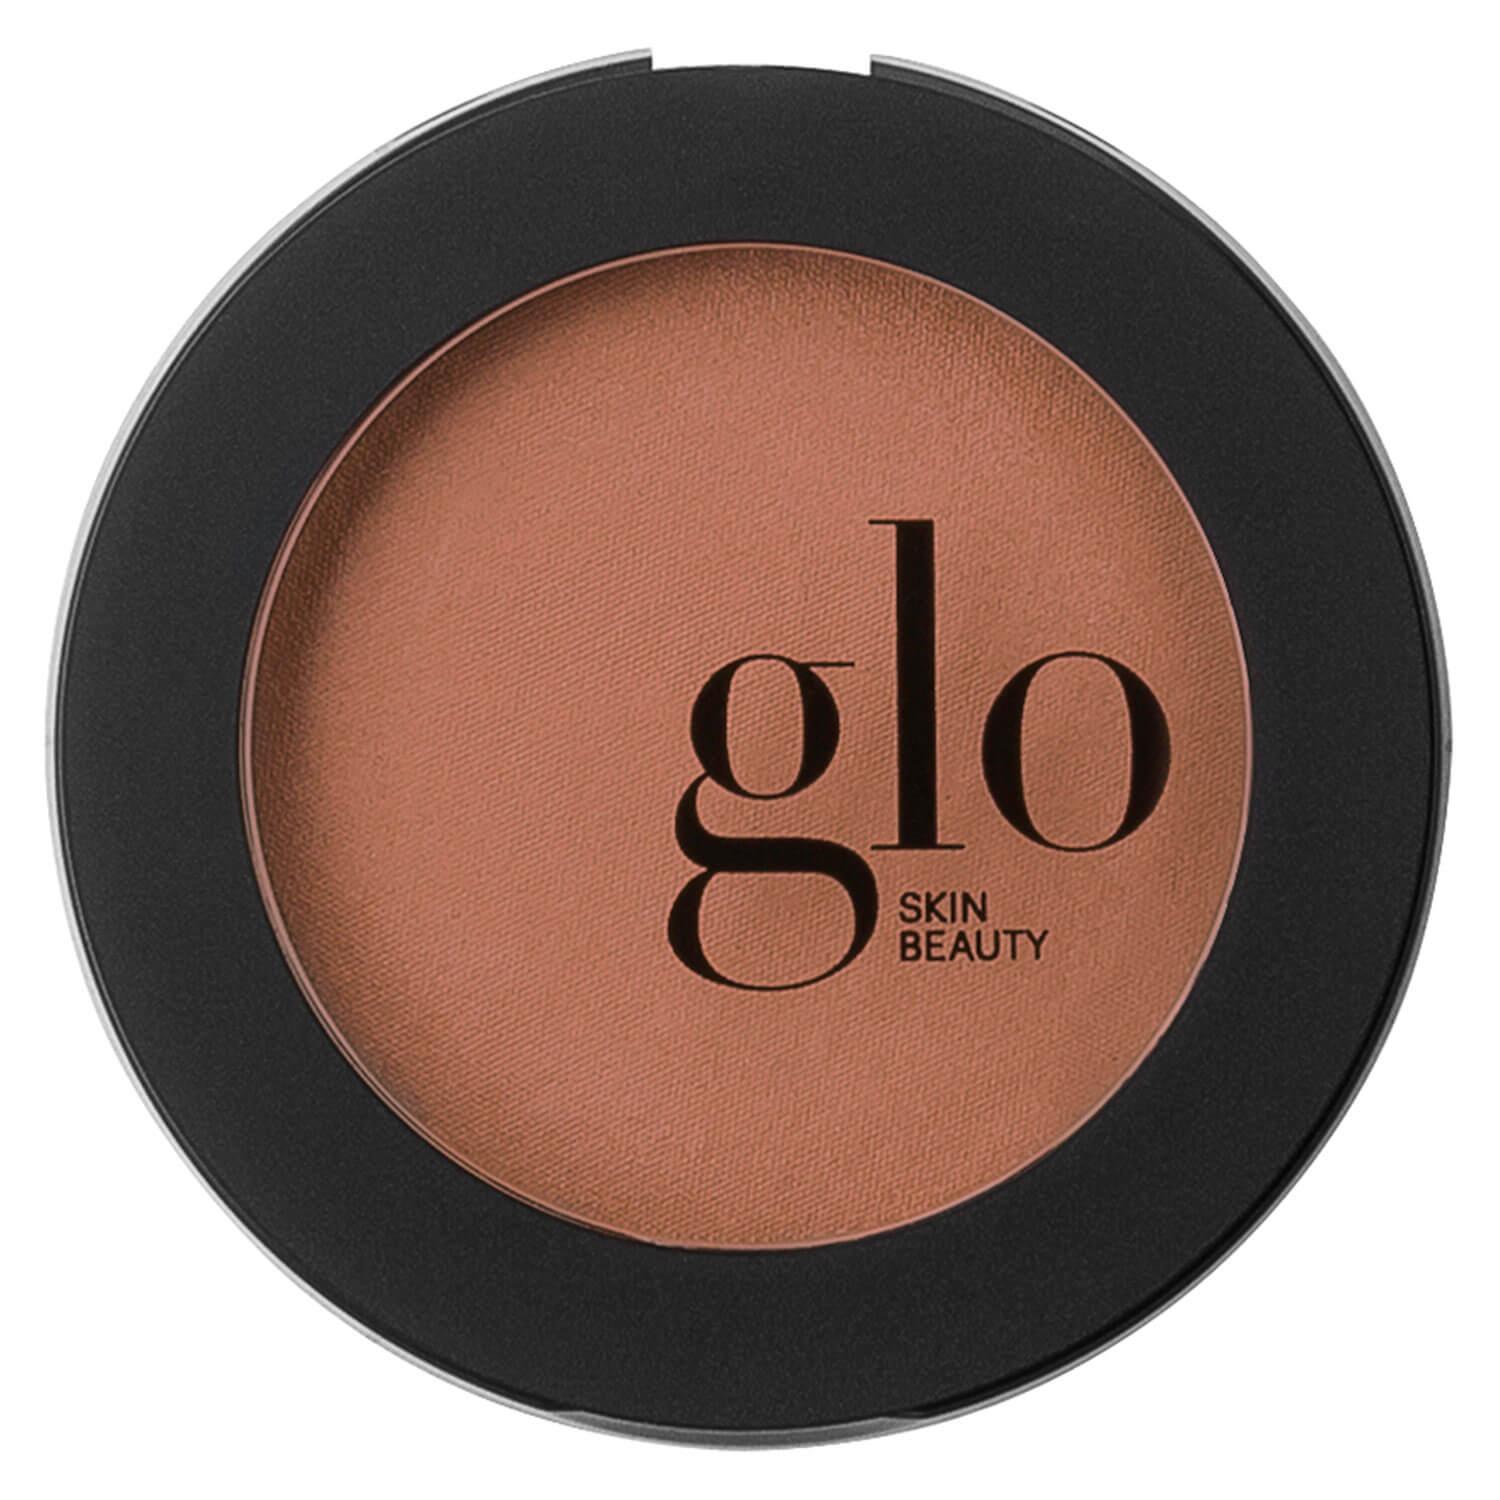 Glo Skin Beauty Blush - Blush Sandalwood